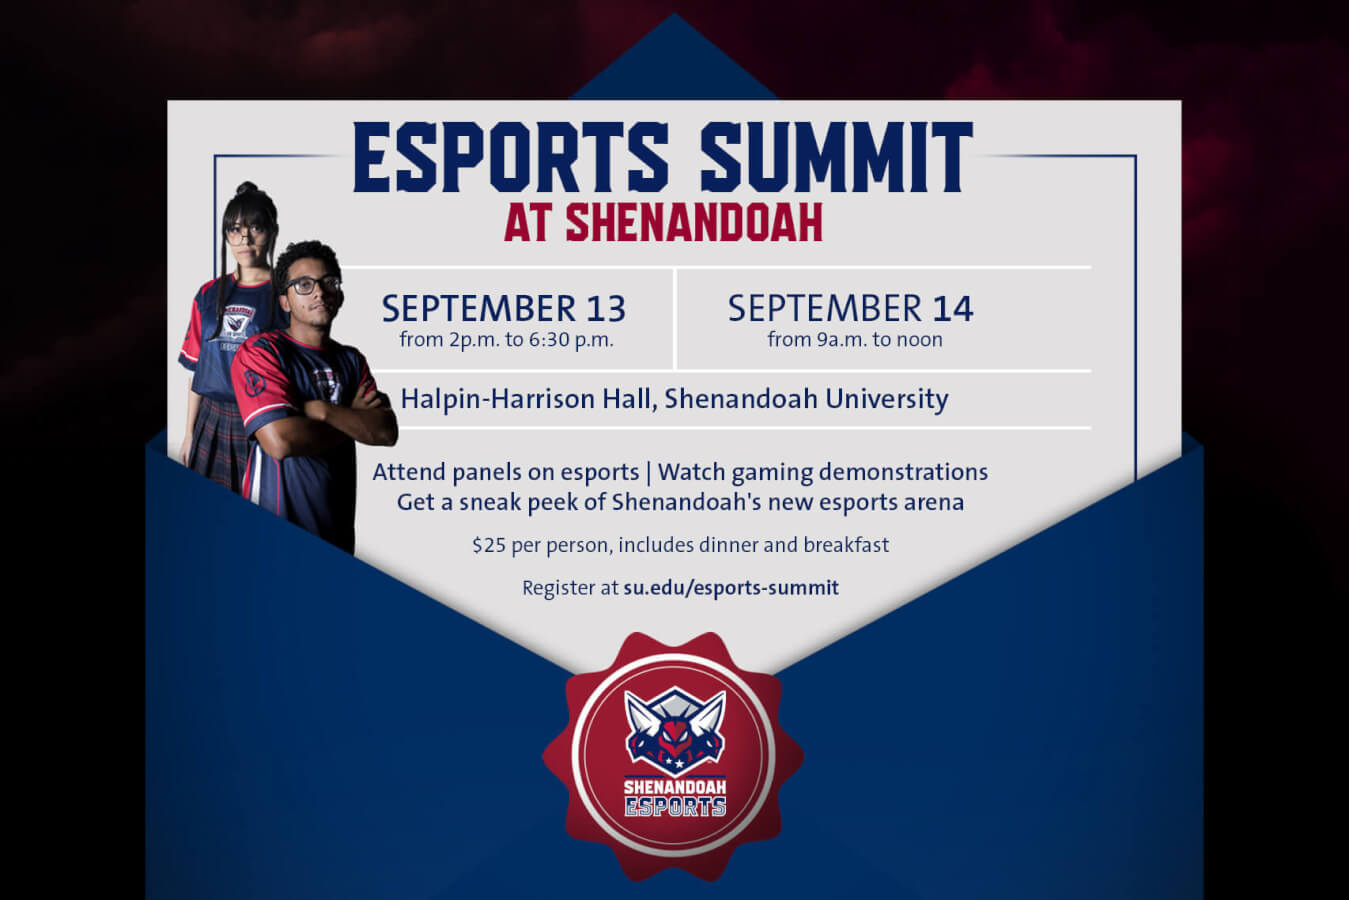 Shenandoah University’s inaugural esports summit Join us for an esports summit on September 13 & 14, 2019